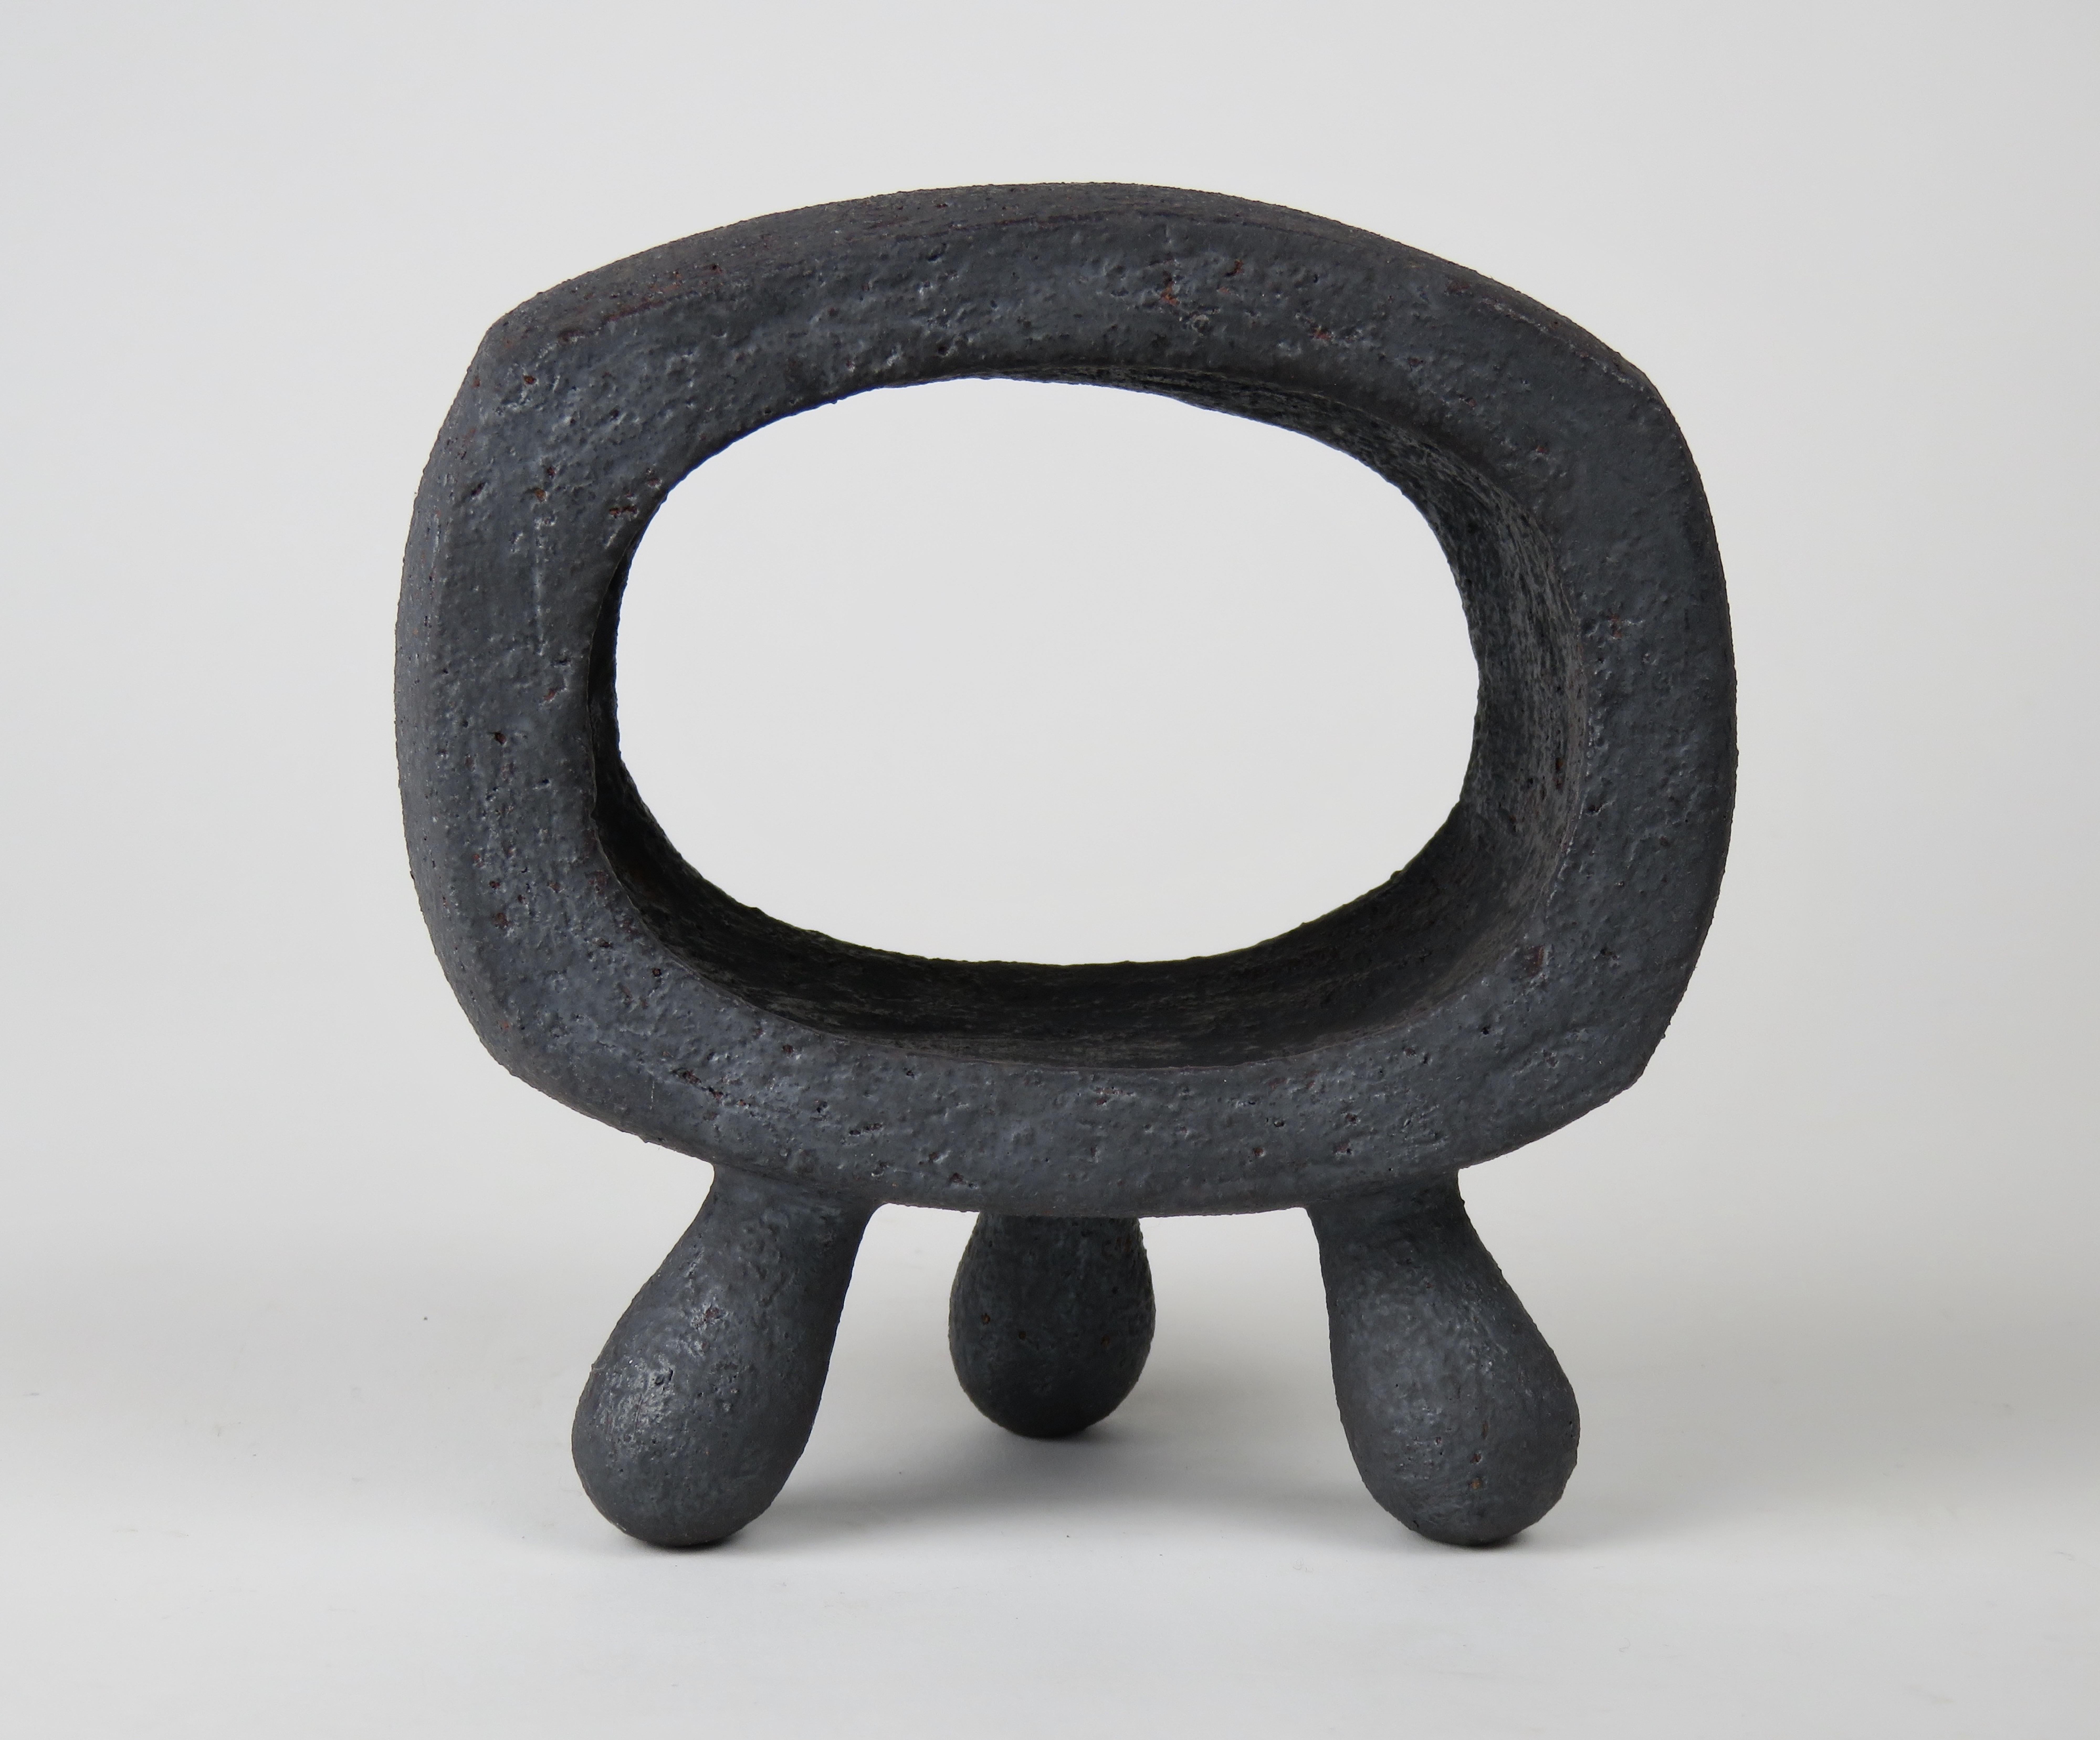 Small Dark Silver-Gray Hollow Rectangular Ring Ceramic Sculpture on 3 Legs 1